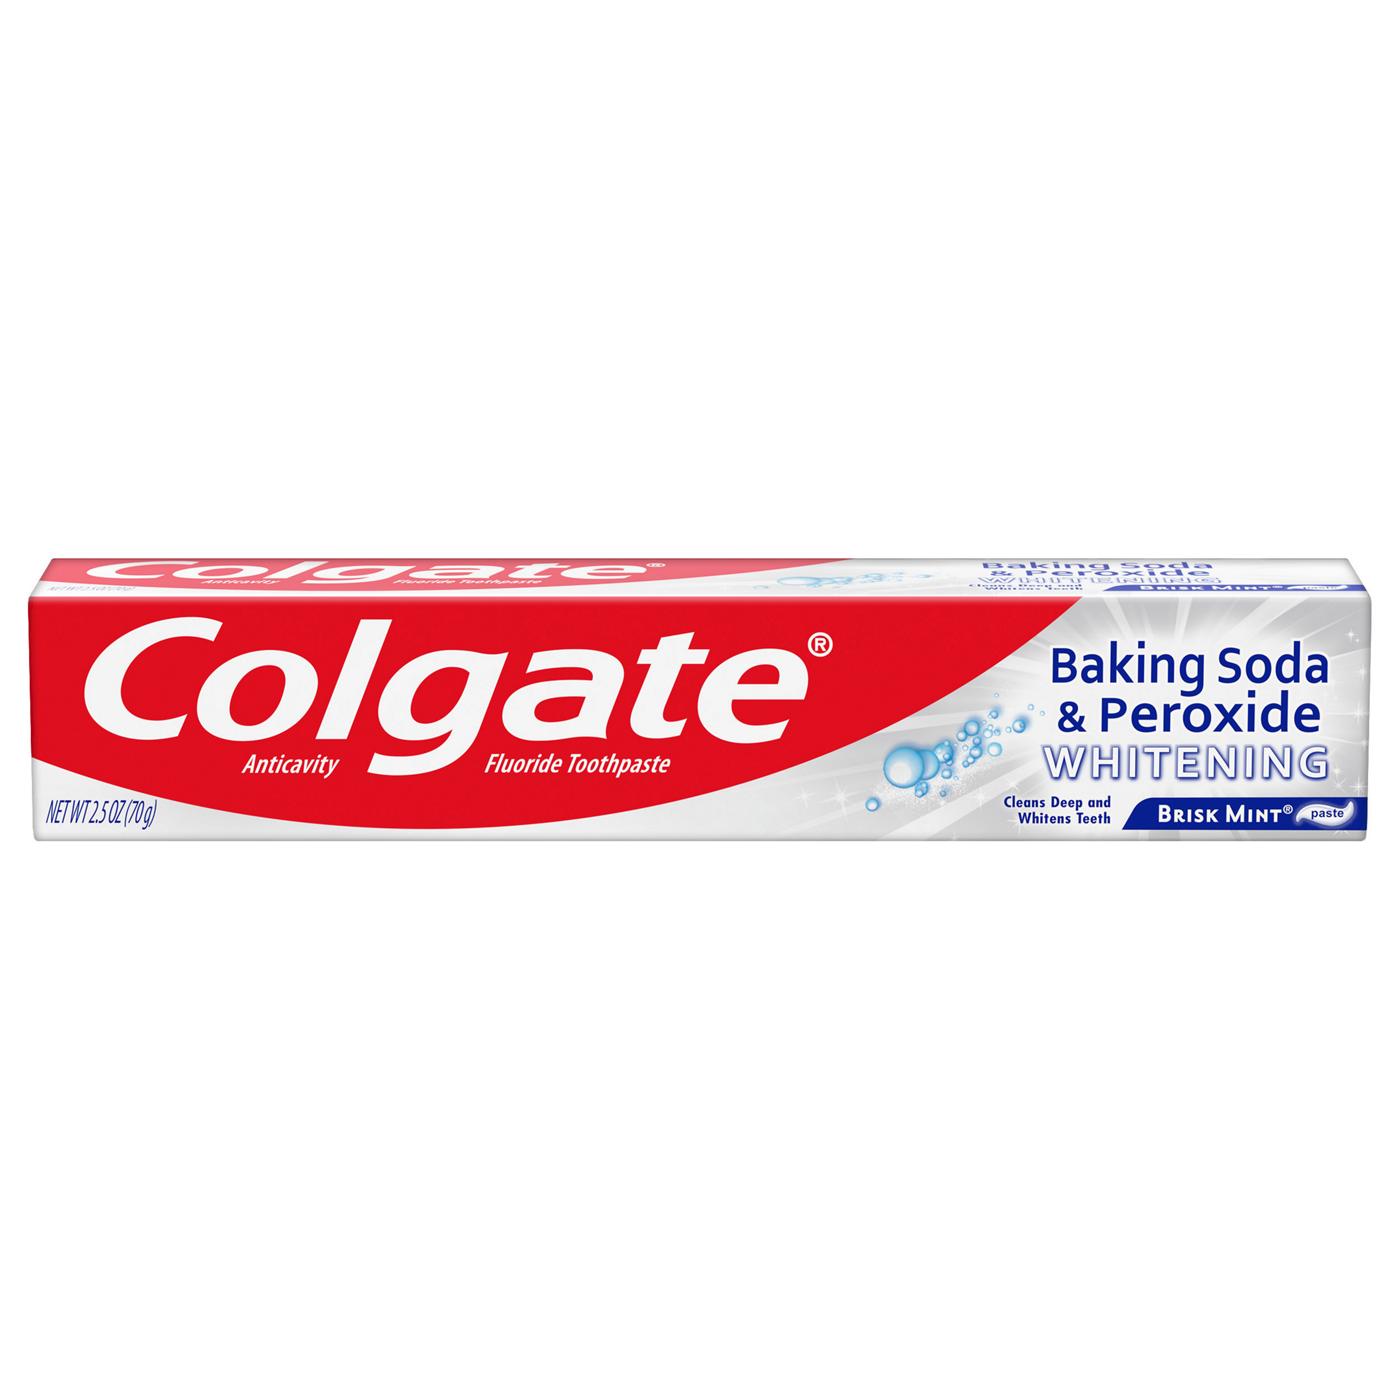 Colgate Baking Soda And Peroxide Whitening Flouride Toothpaste, Brisk Mint; image 1 of 2